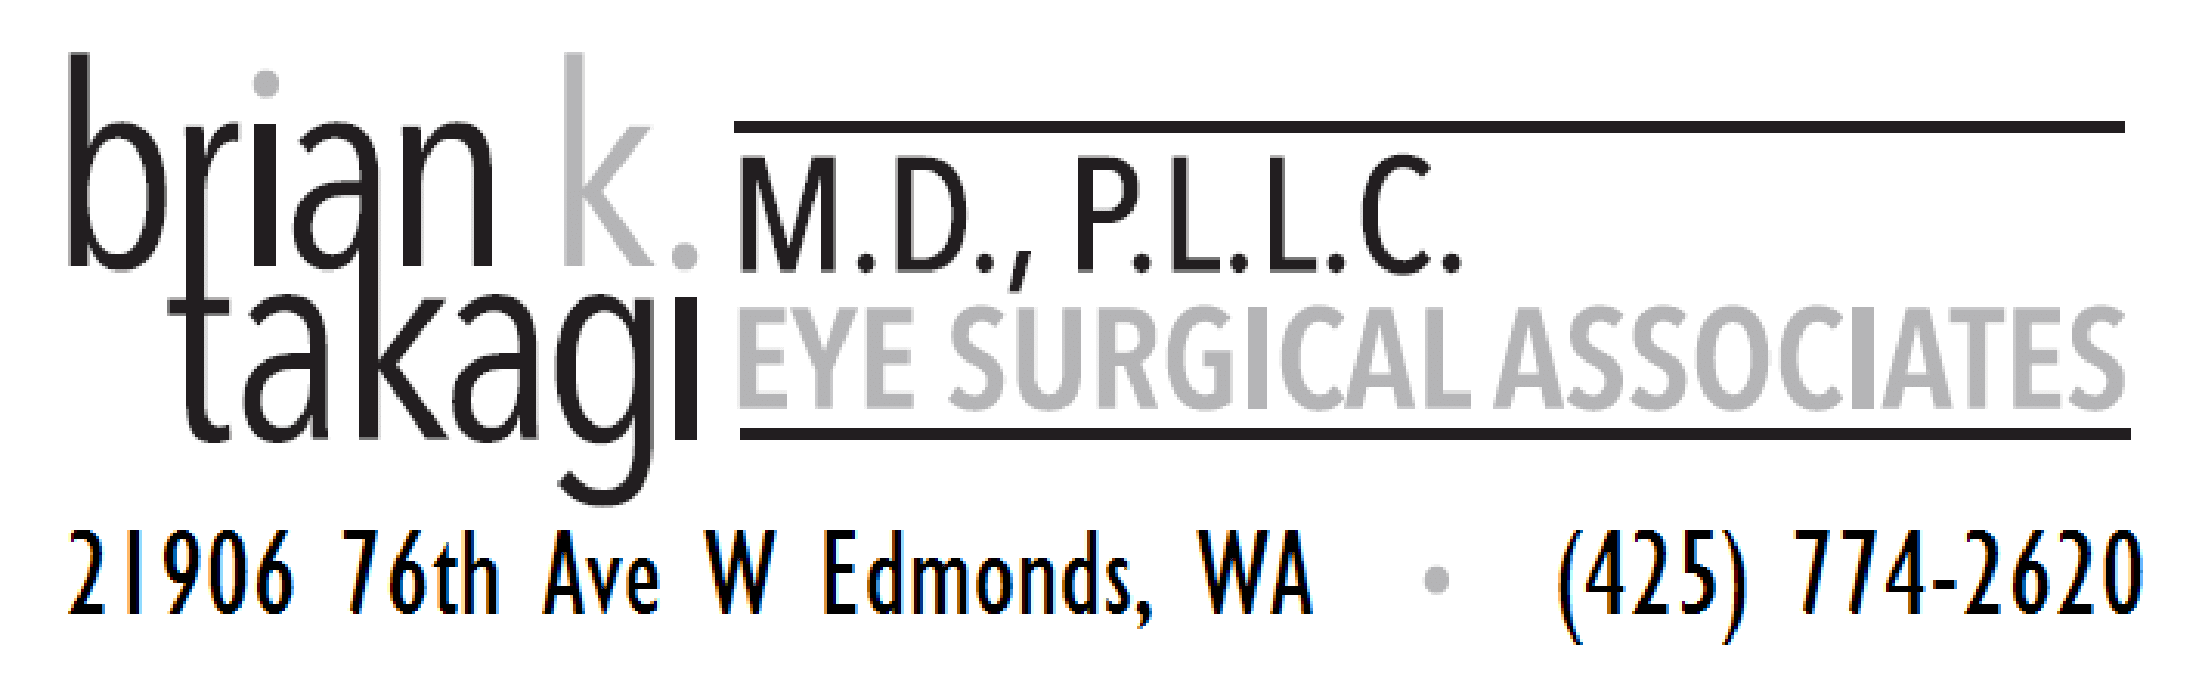 Eye Surgical Associates, P.L.L.C.